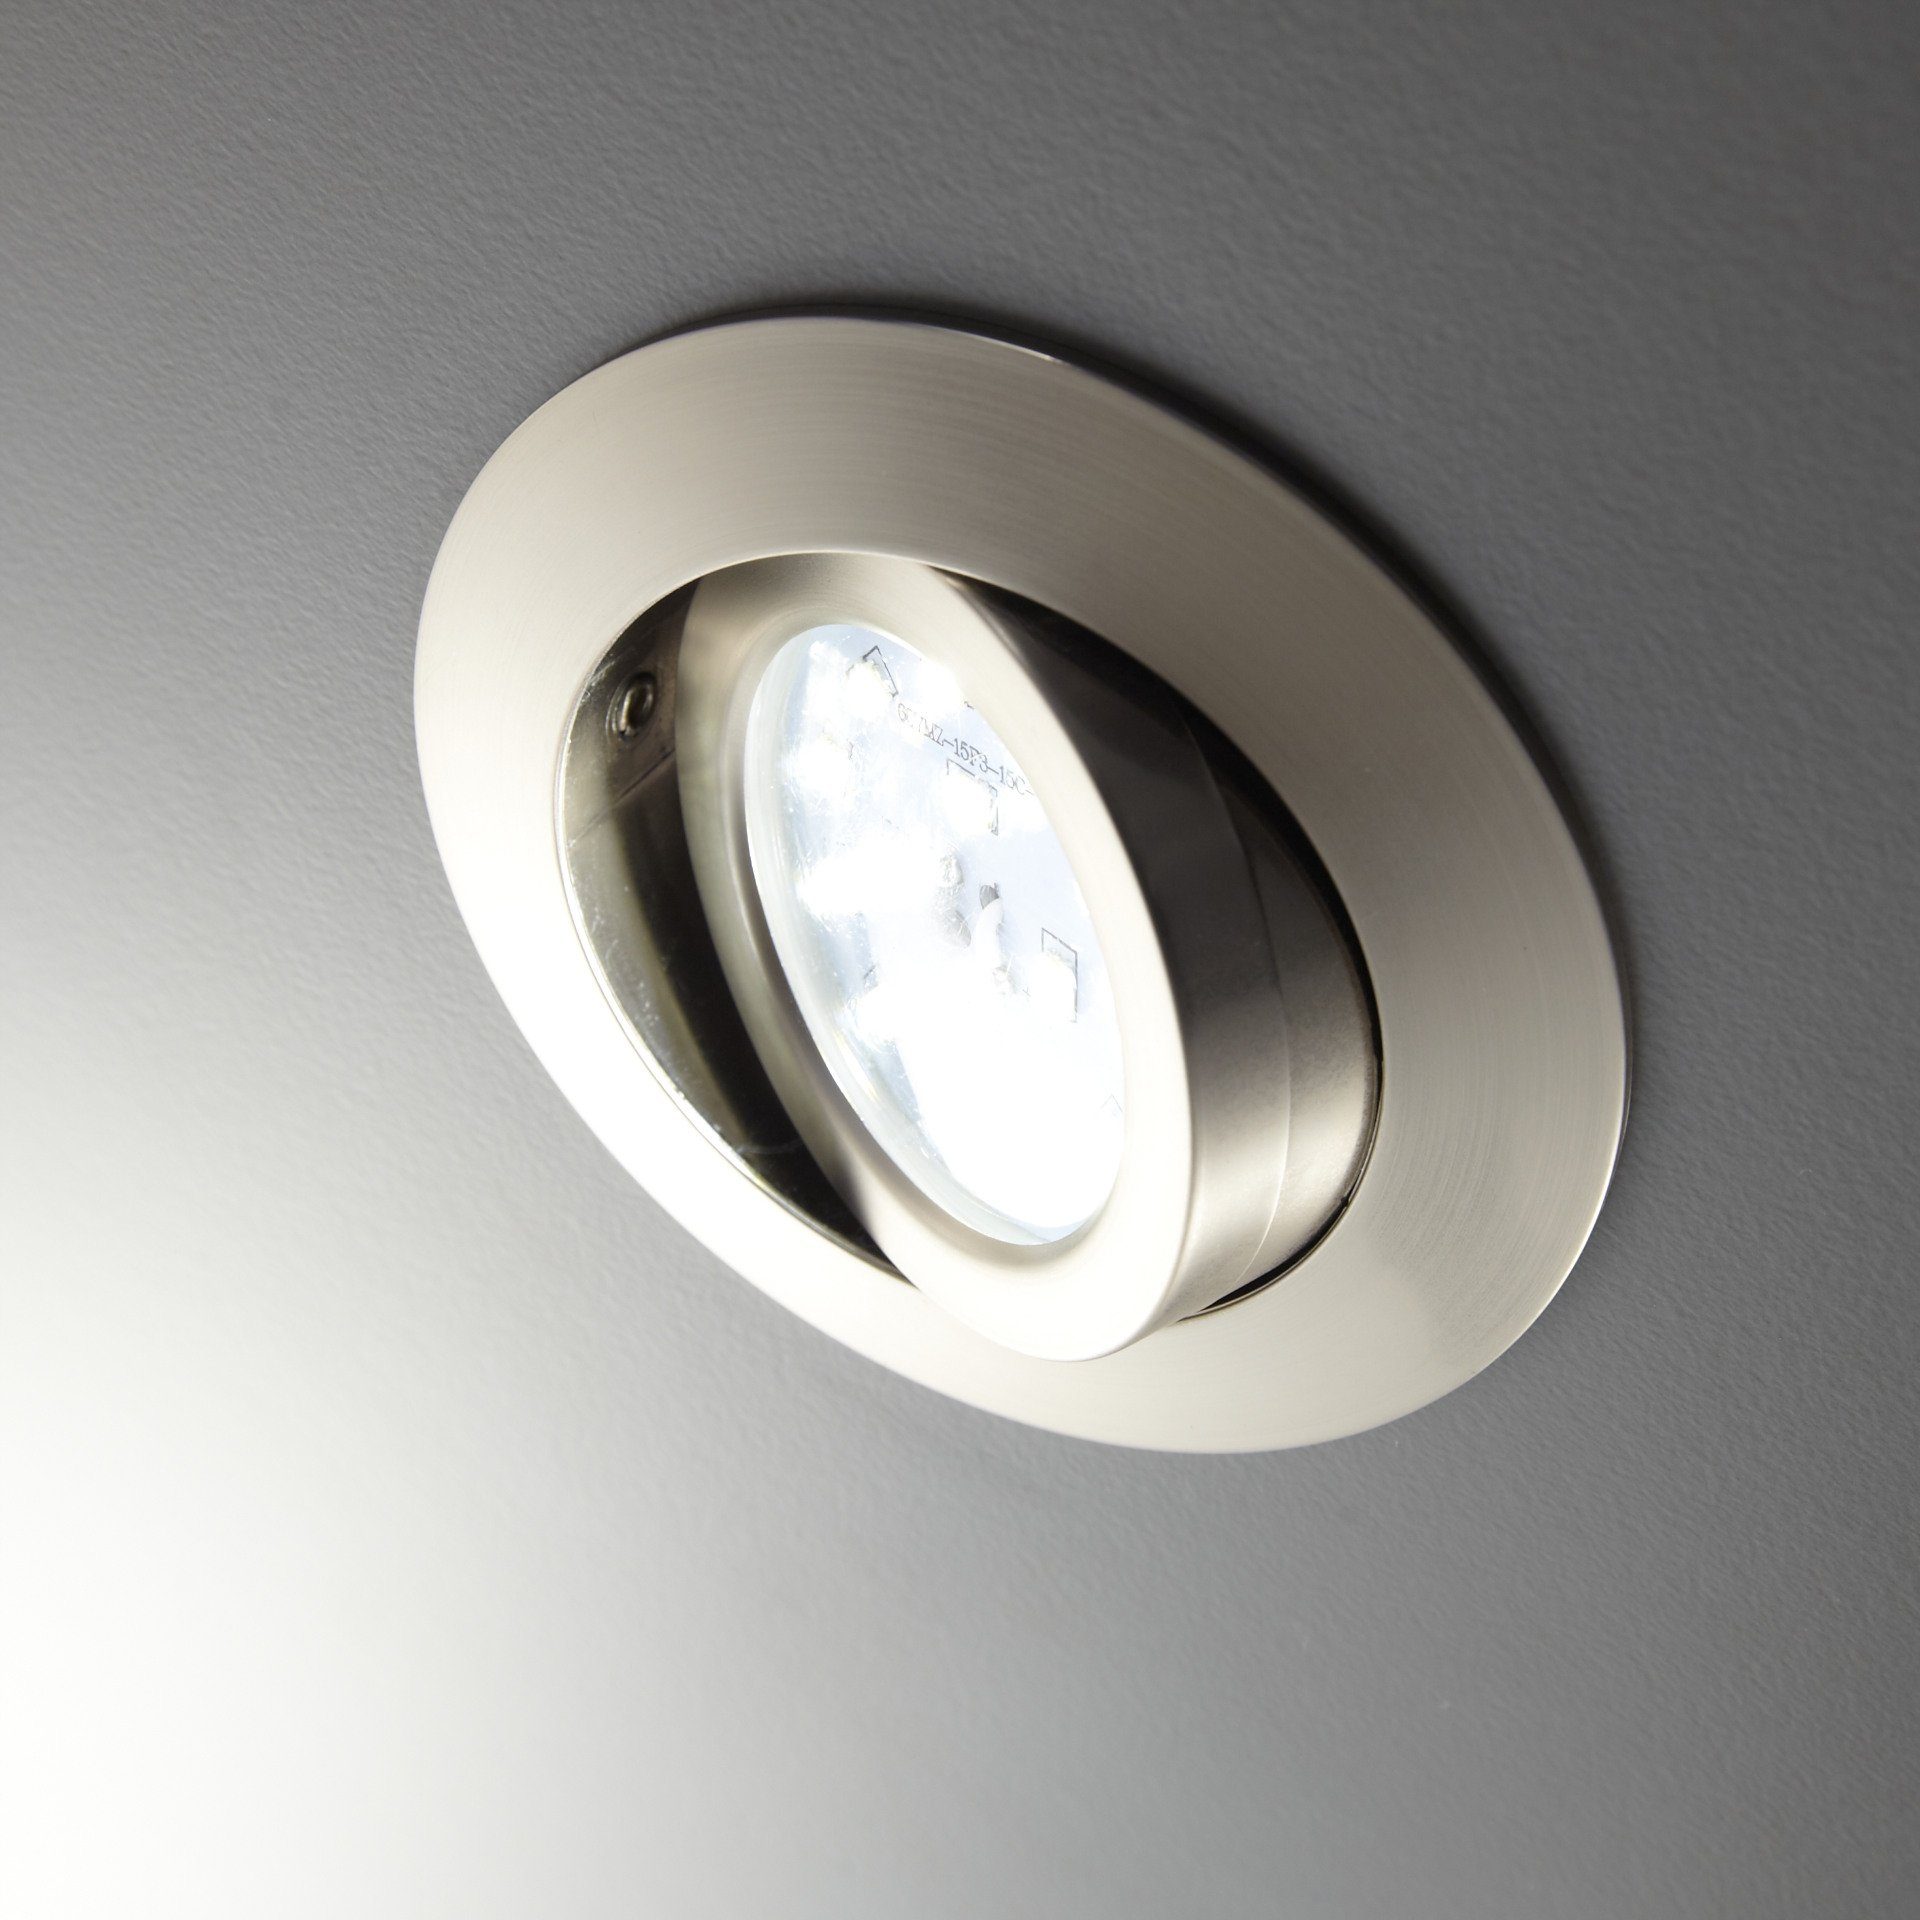 B.K.Licht LED Einbauleuchte Kiro, Warmweiß, integriert, schwenkbar, 5W fest ultra-flach, matt-nickel LED Deckenbauspots